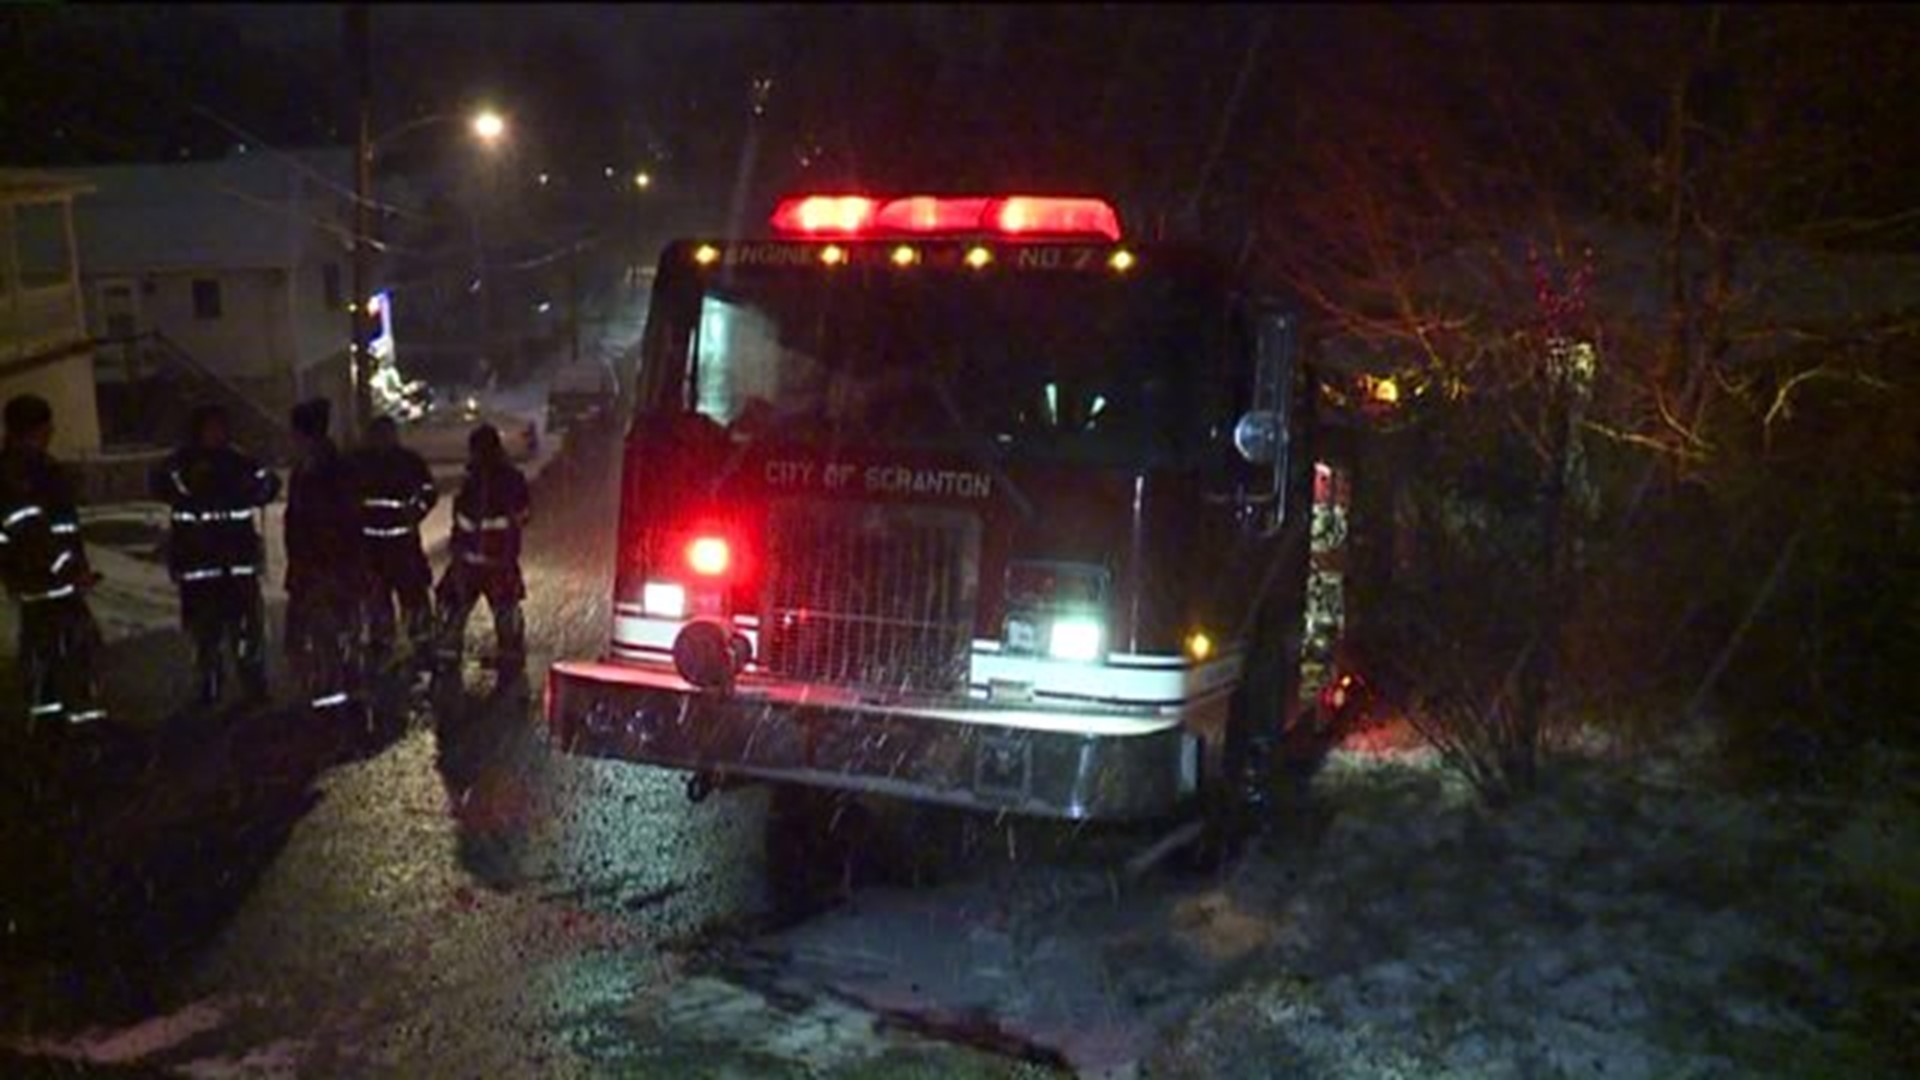 Fire Truck Stuck in Snow in Scranton